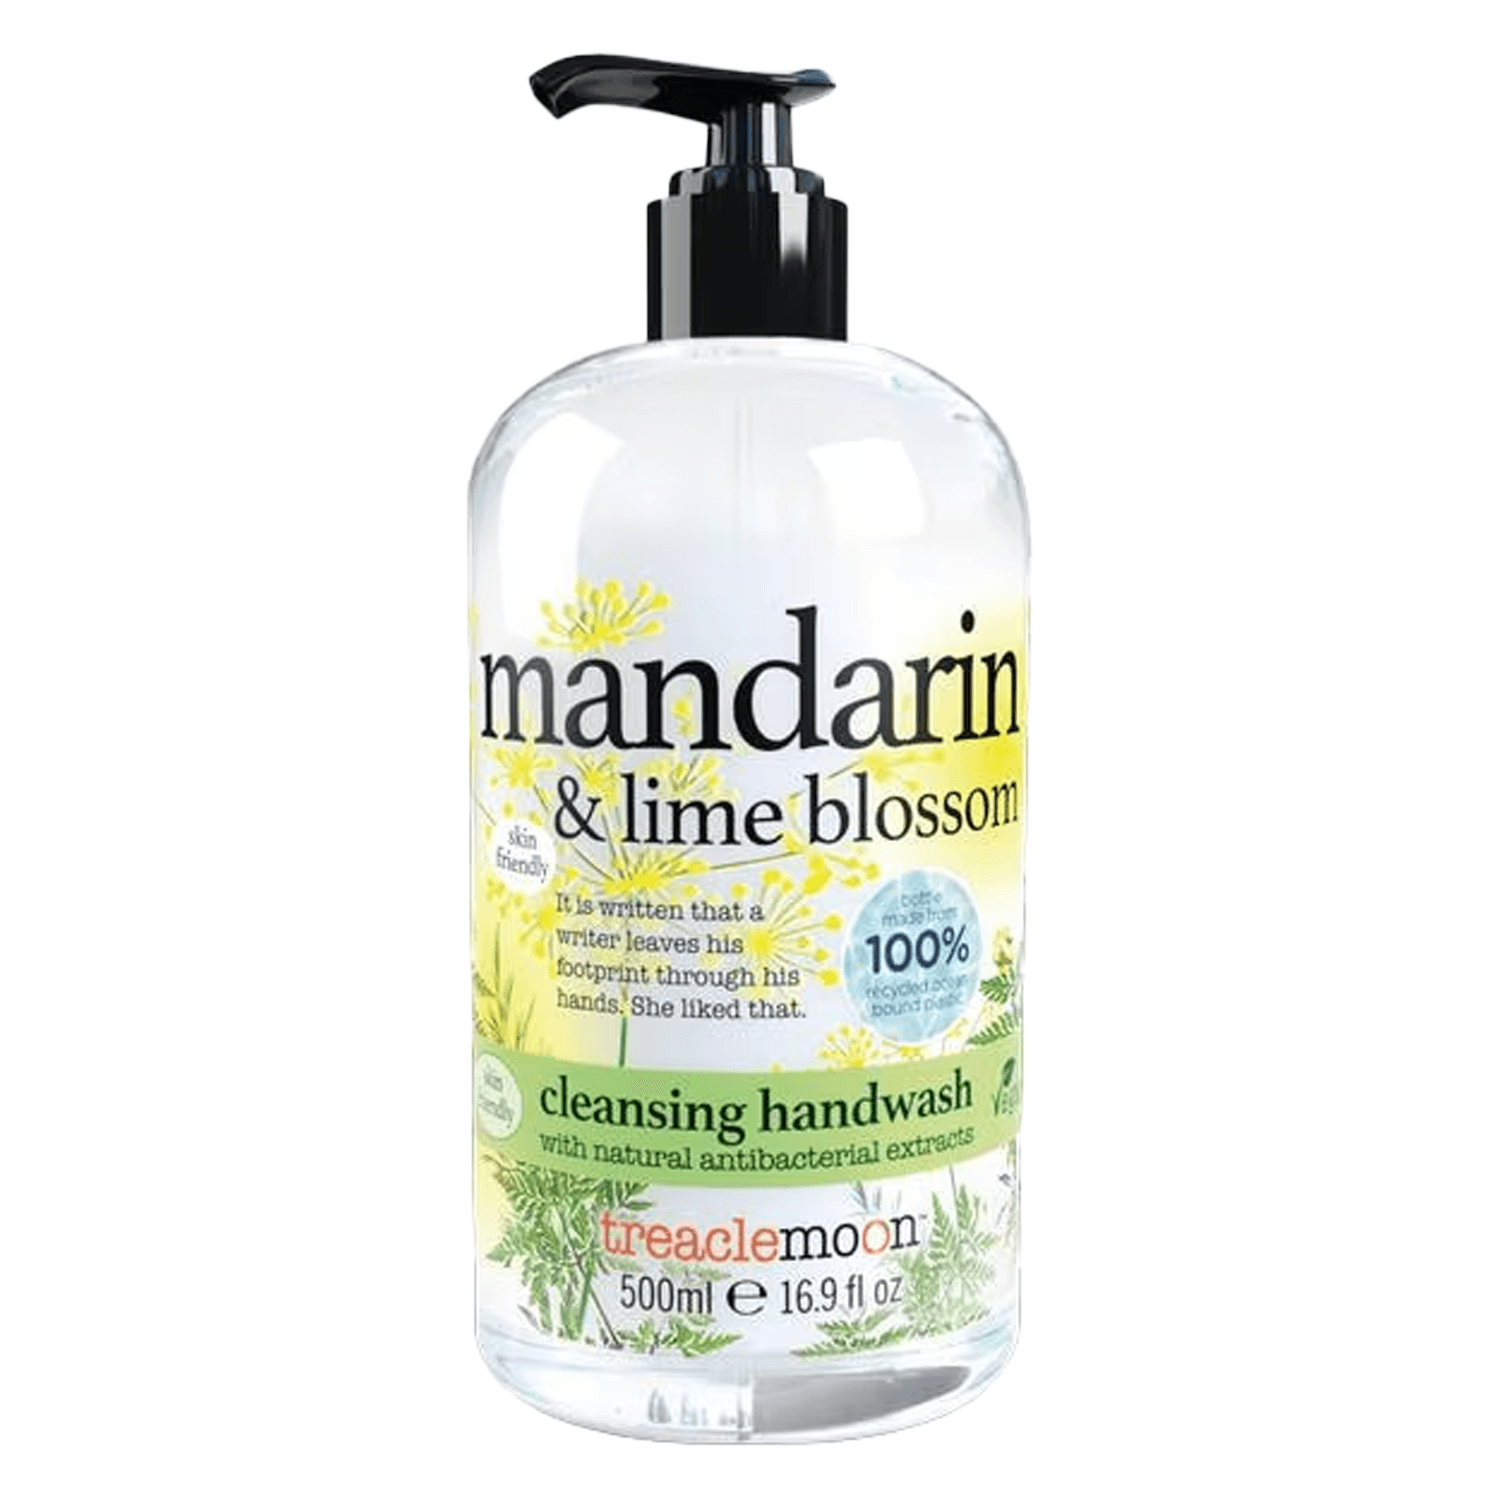 Produktbild von treaclemoon - mandarin & lime blossom cleansing handwash